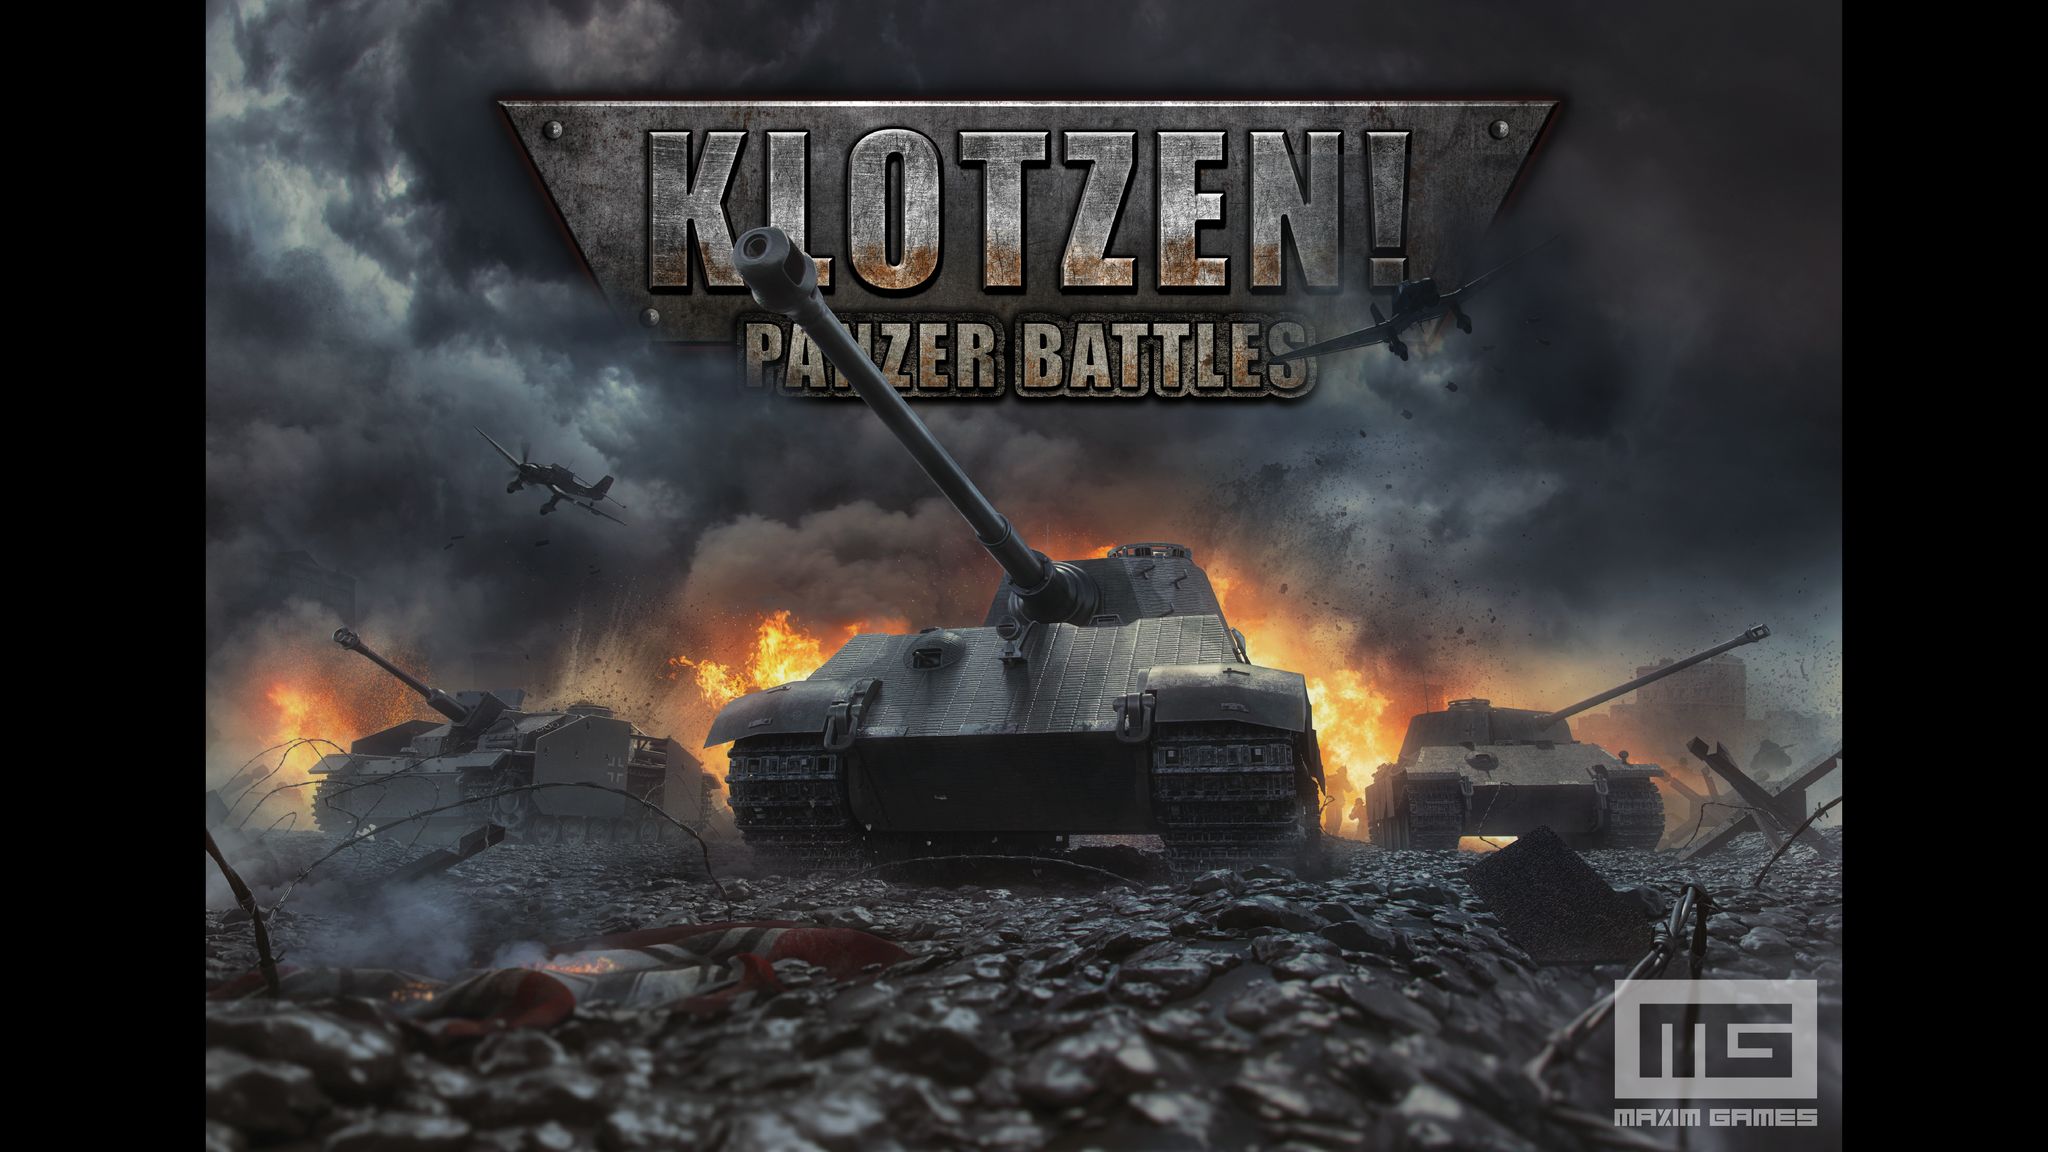 Klotzen! Panzer Battles dobio datum izlaska